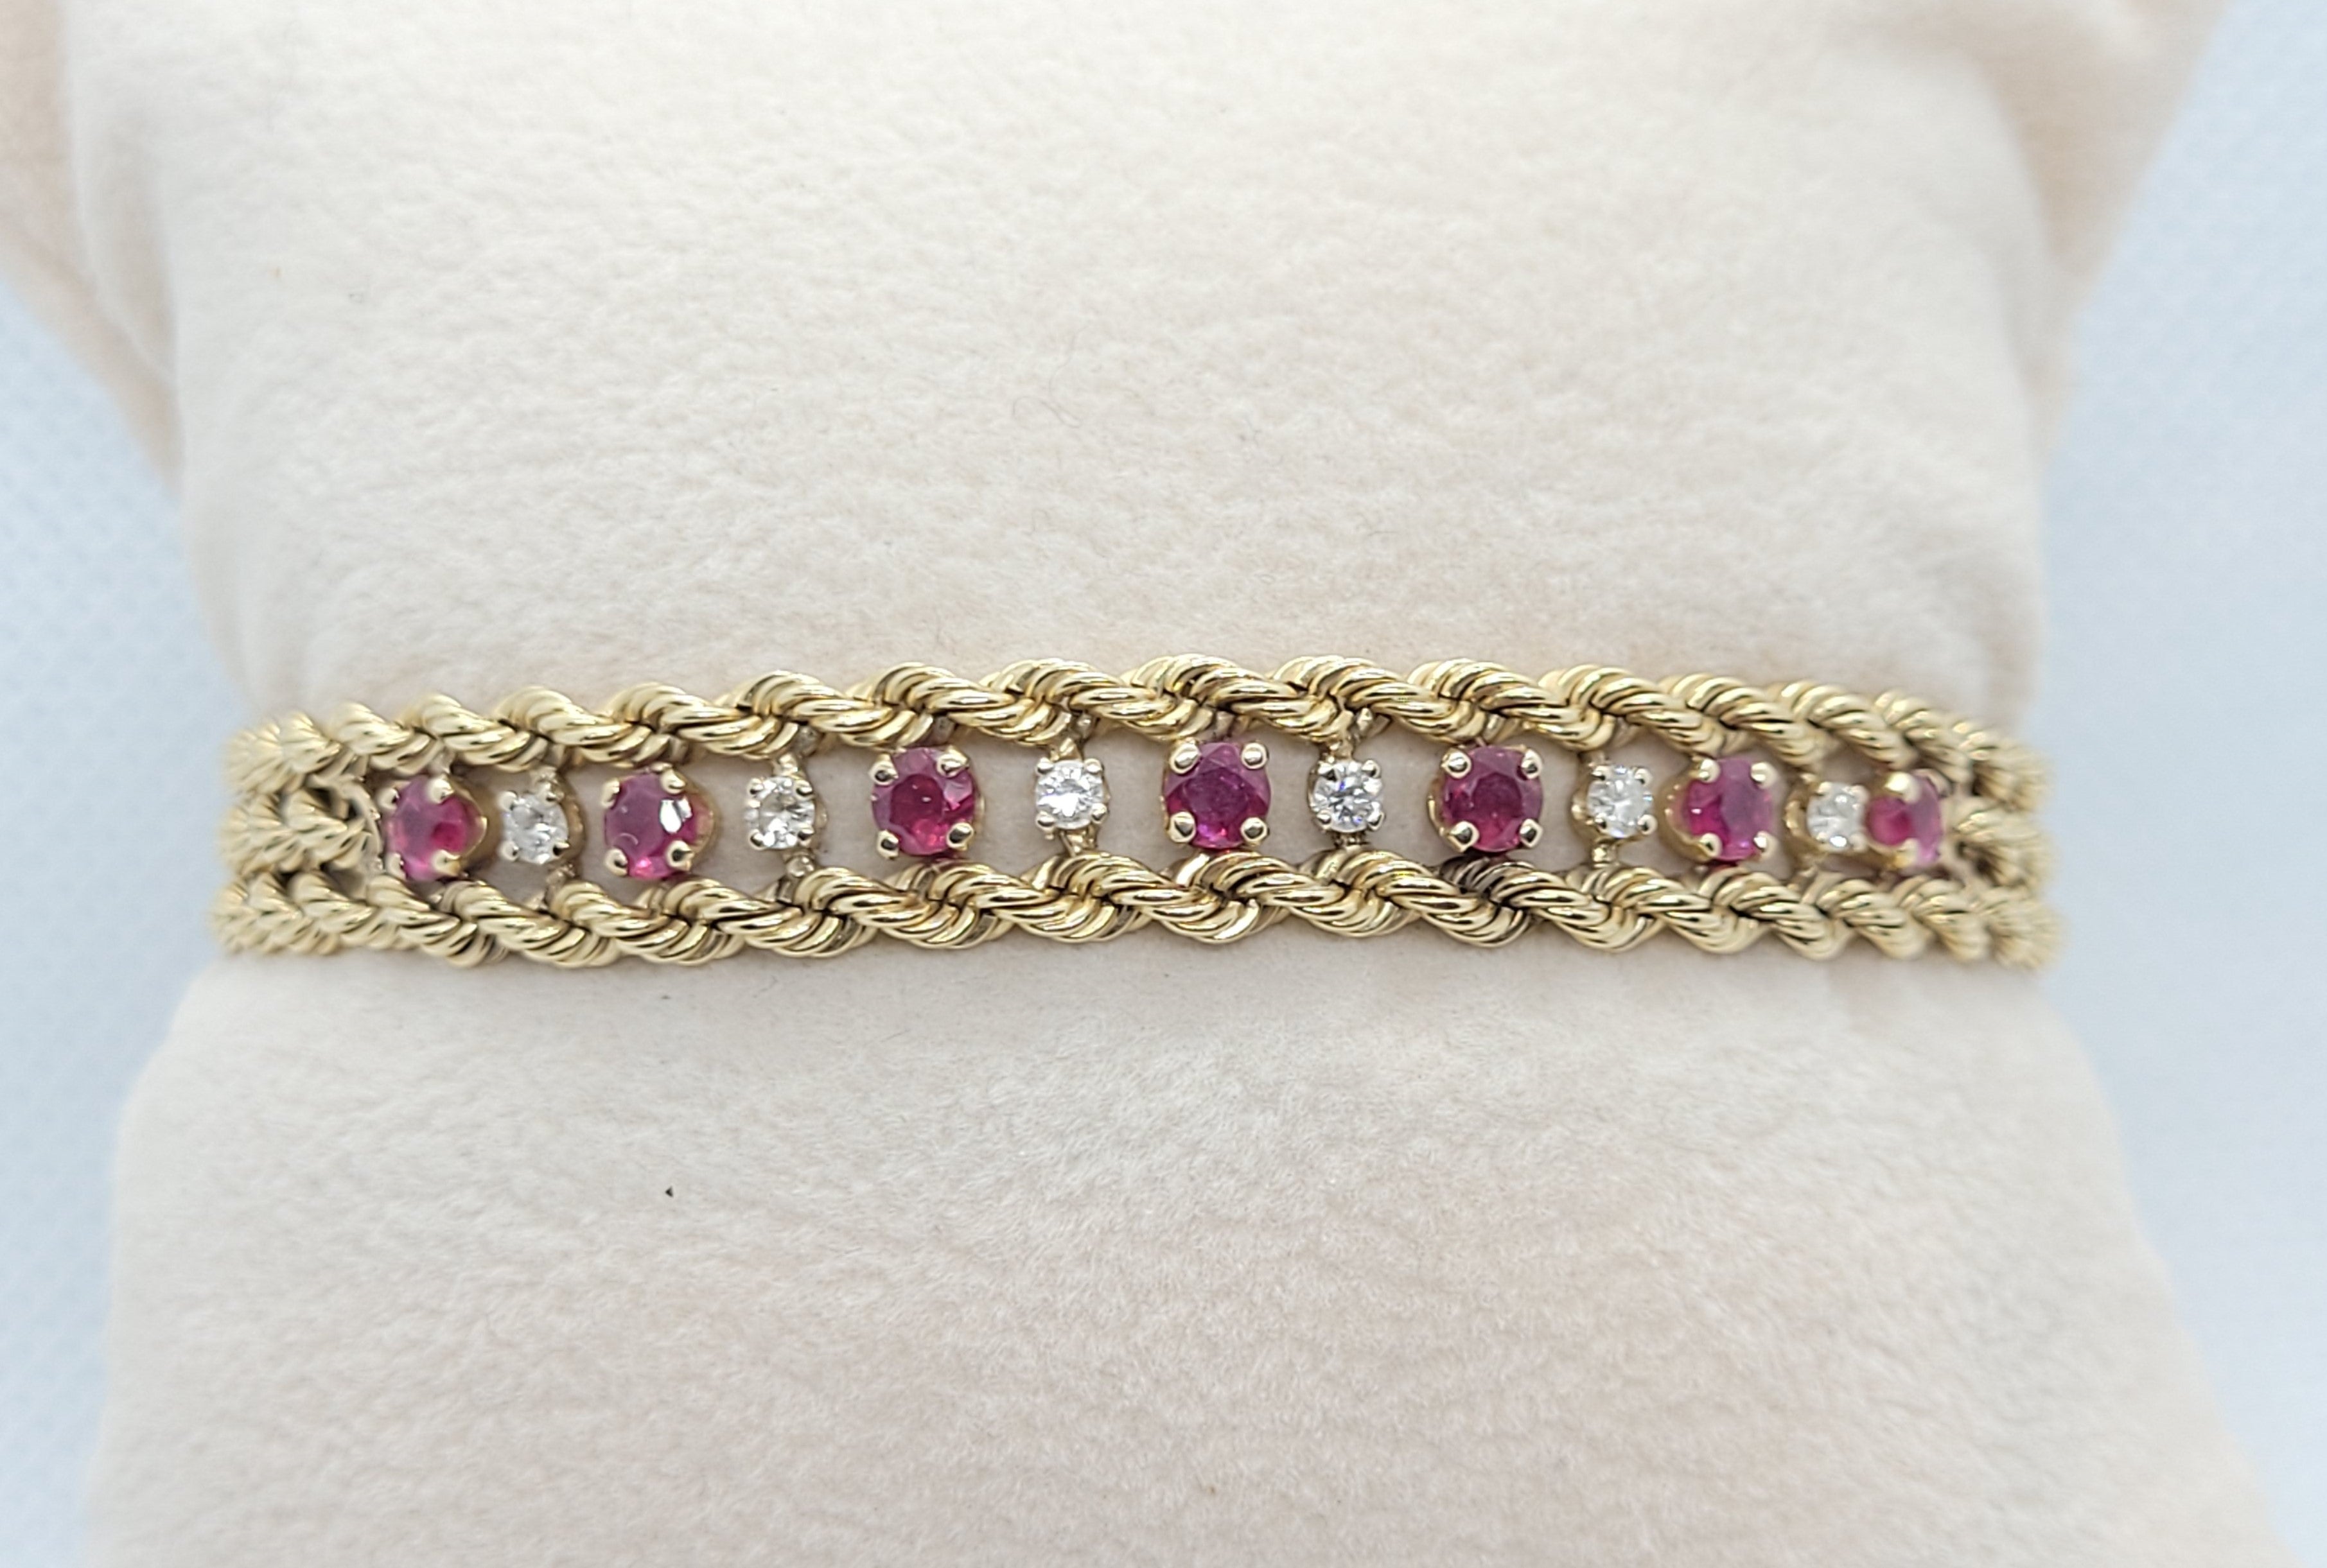 Diamond Bracelet - Rope Bracelet Chain In Solid Gold